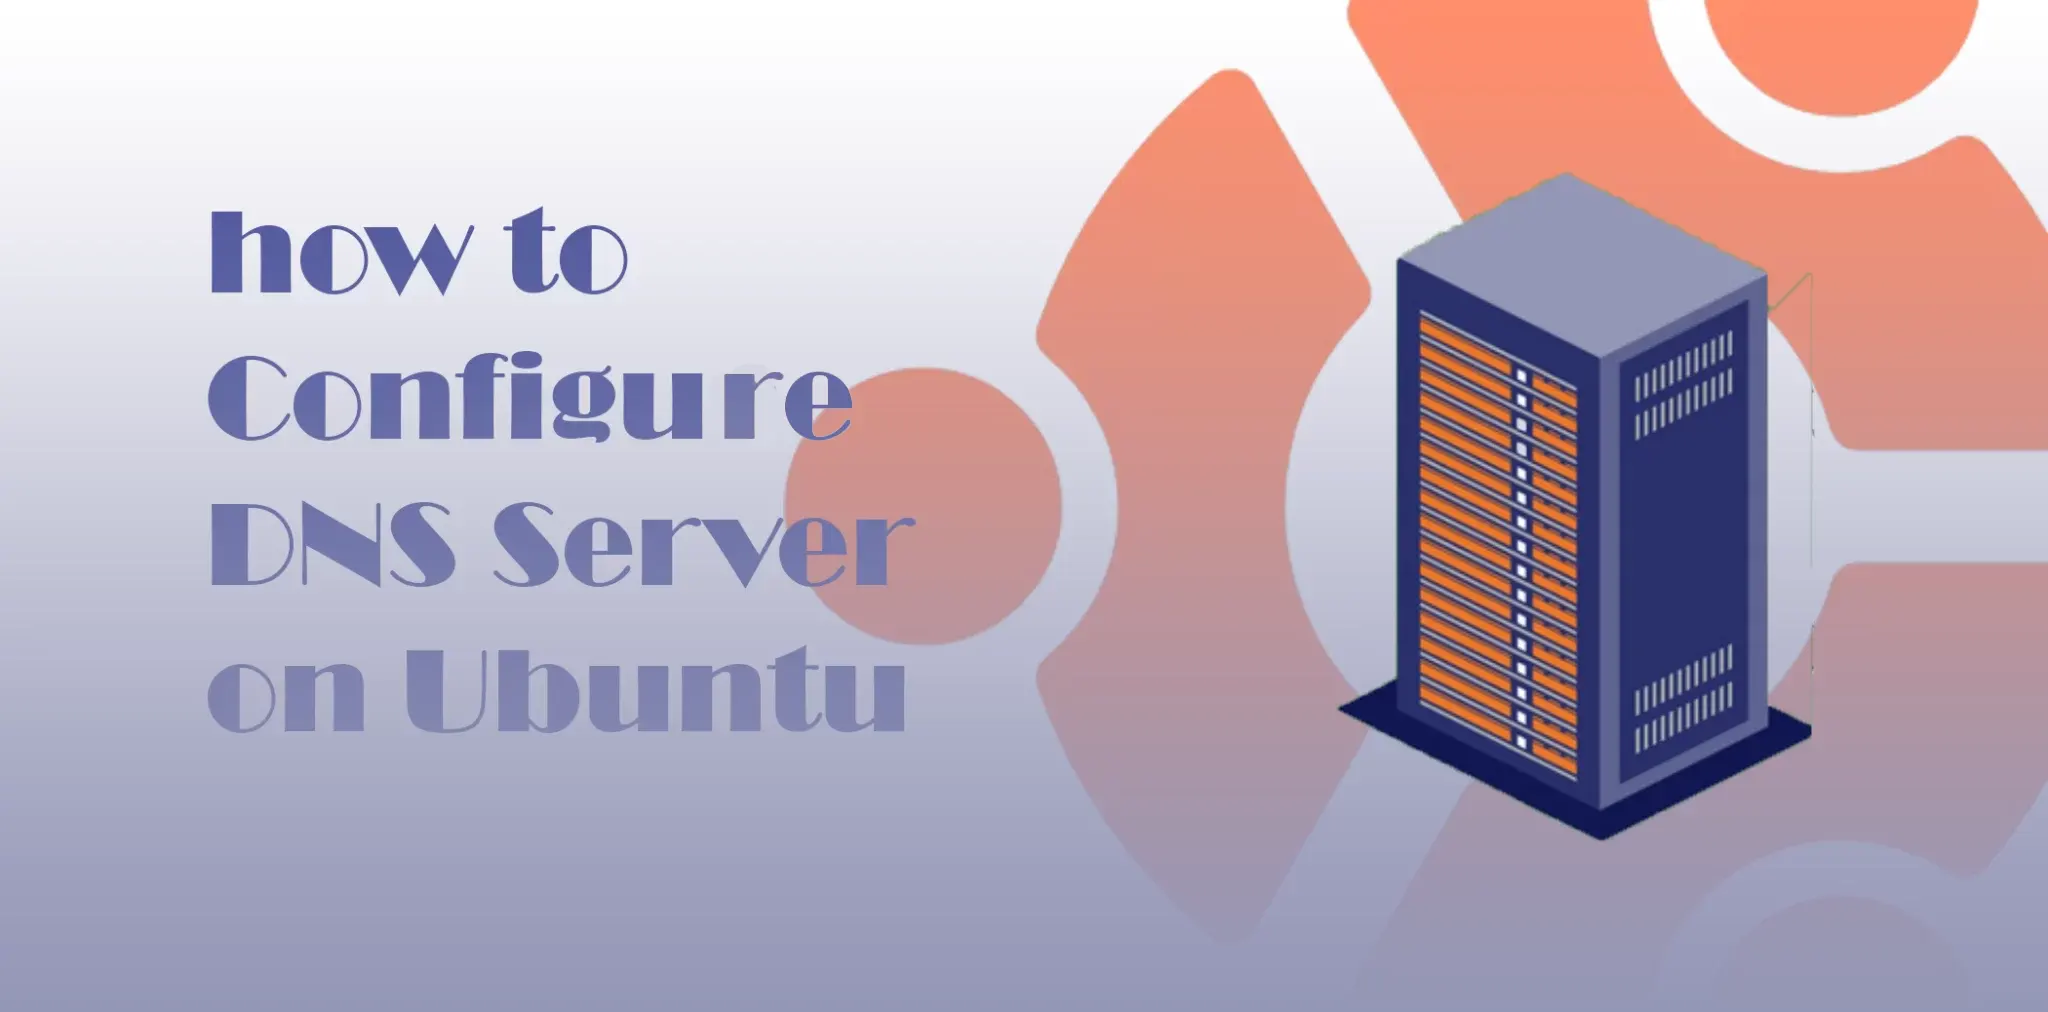 how to configure dns server on ubuntu 22.04